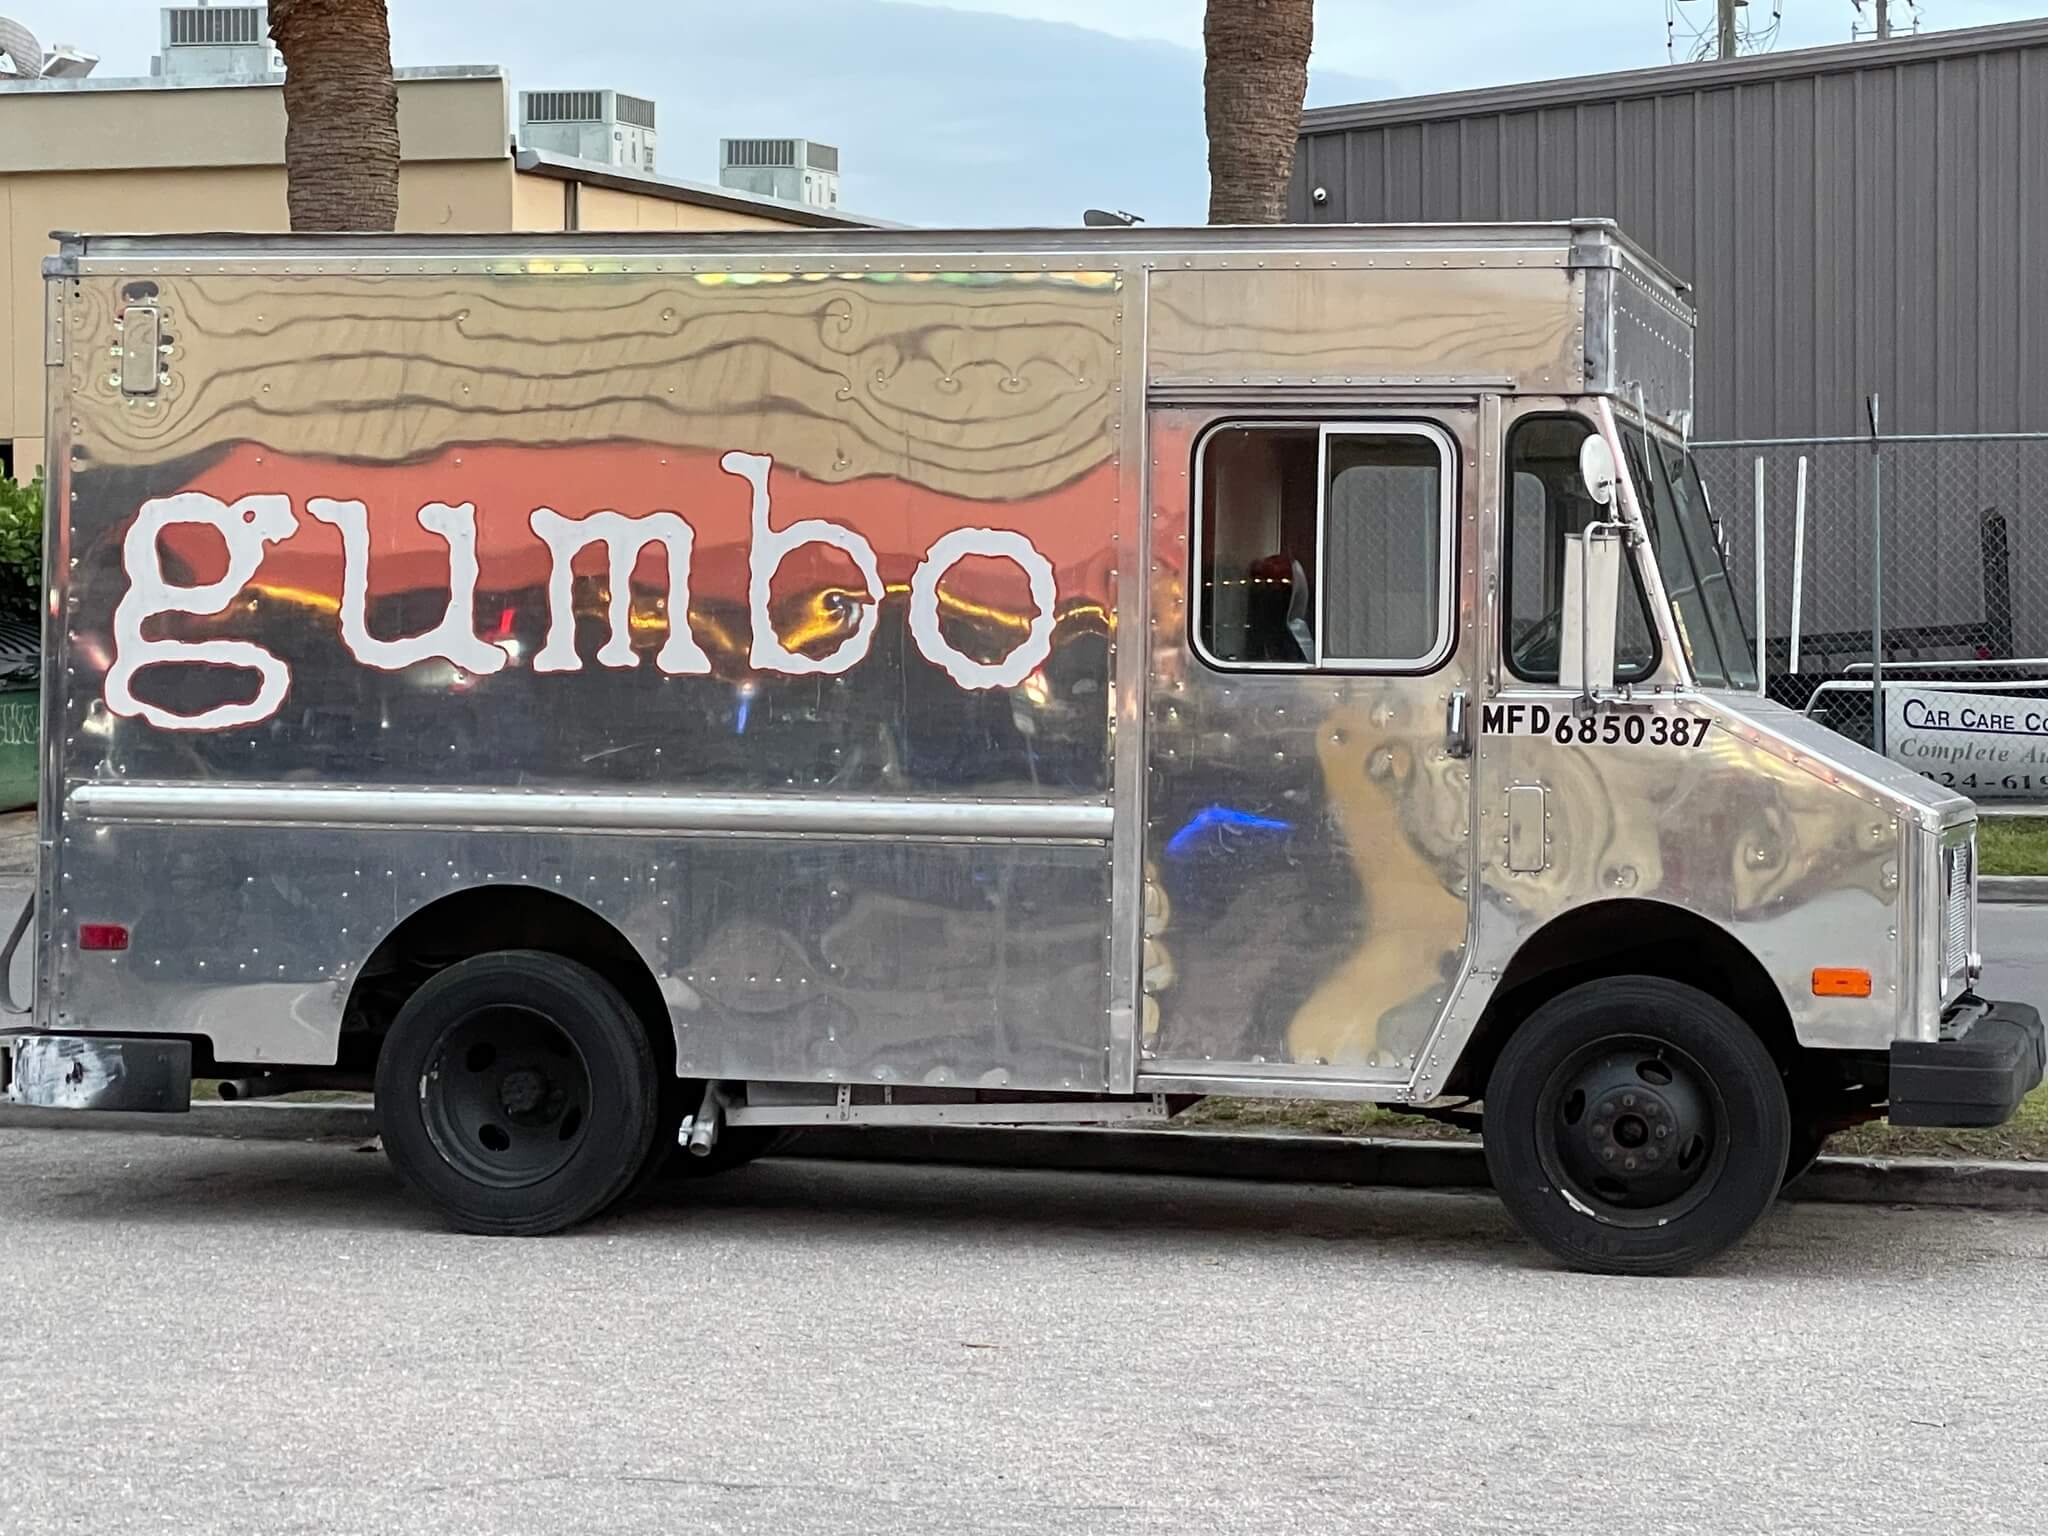 Shiny Gumbo Food truck